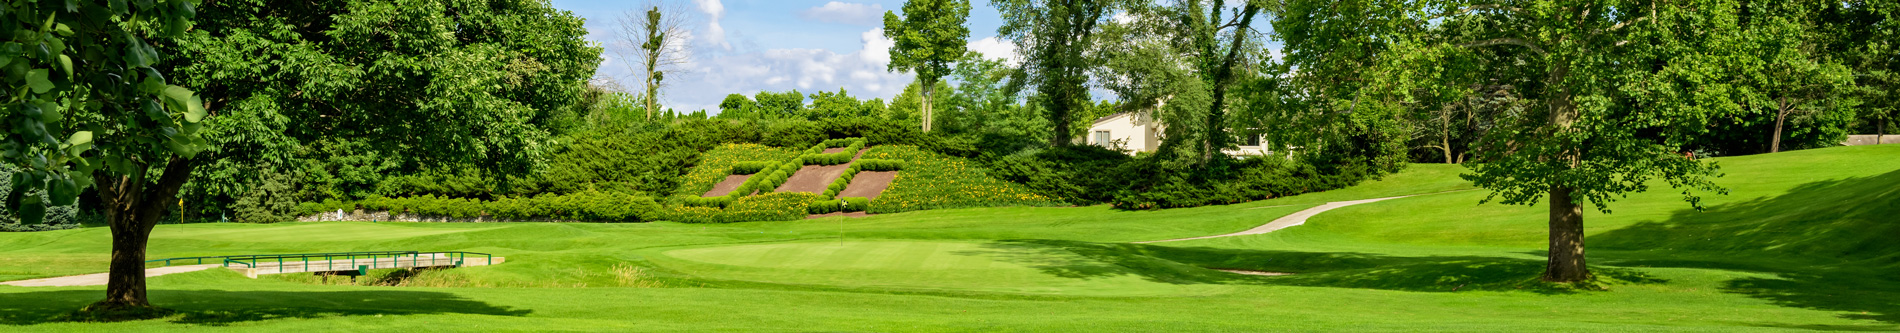 beautiful golf course in Piqua Ohio near Dayton